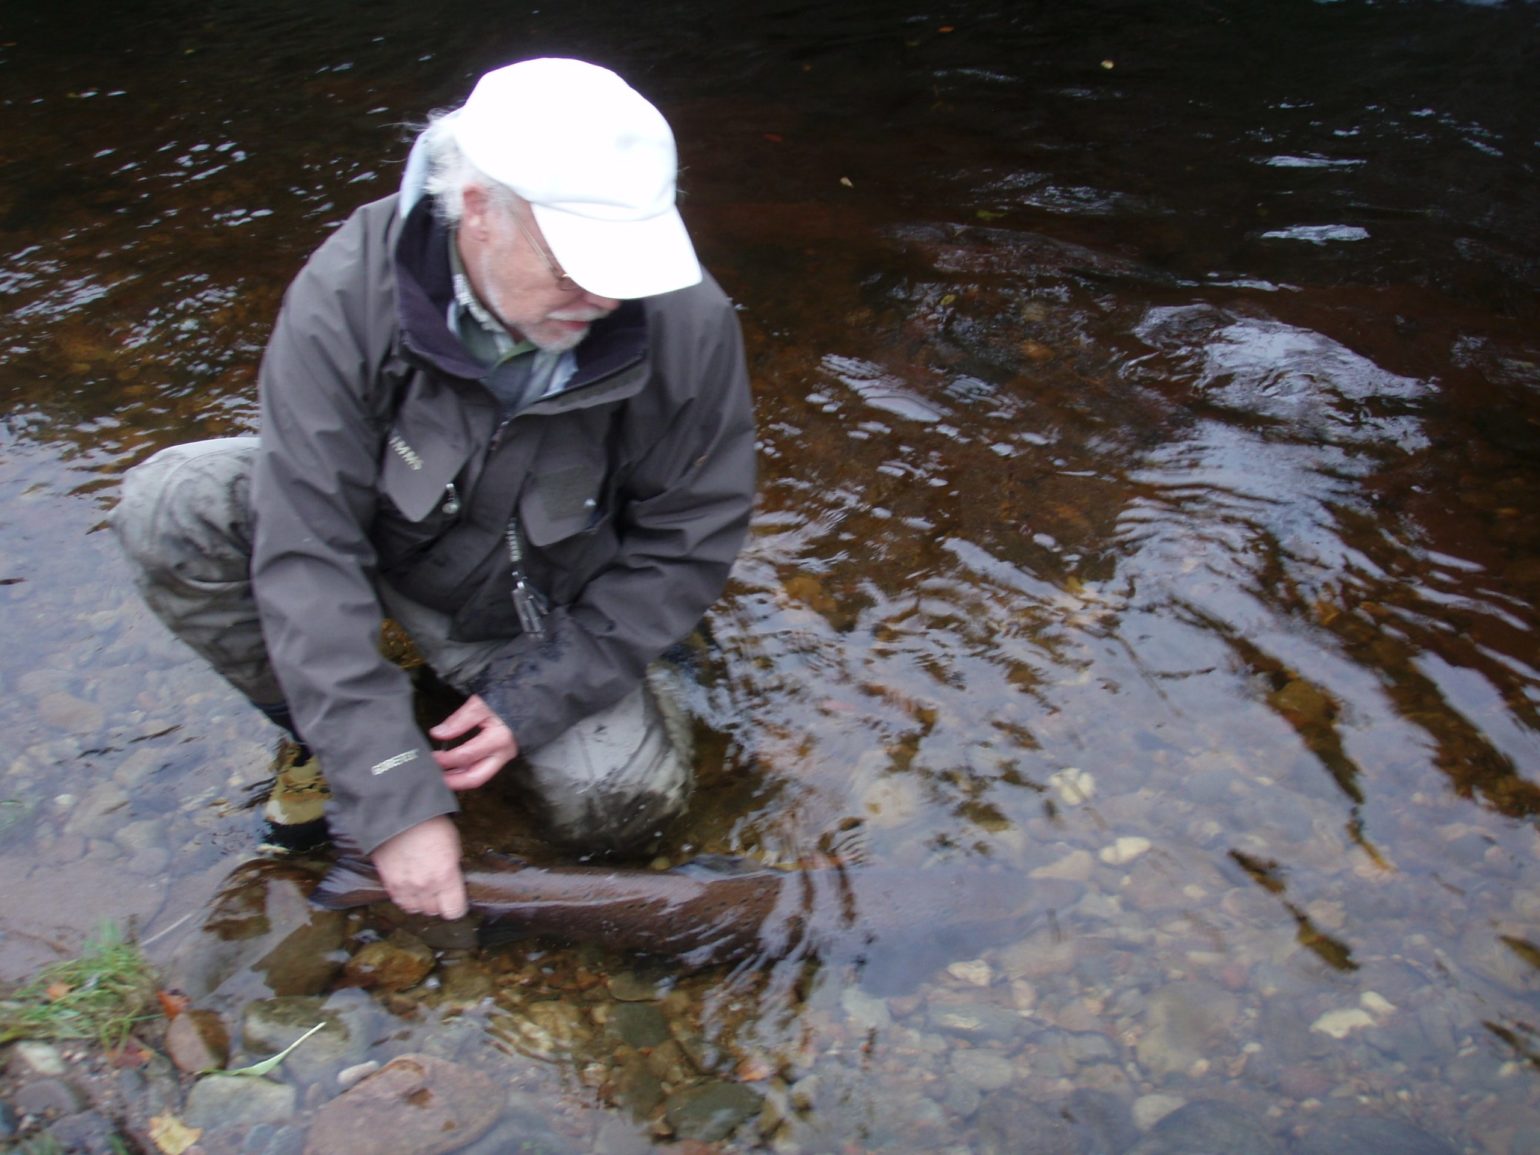 northesk scotland skotlanti skottland flyfishing flugfiske perhokalastus salmon lohi lax